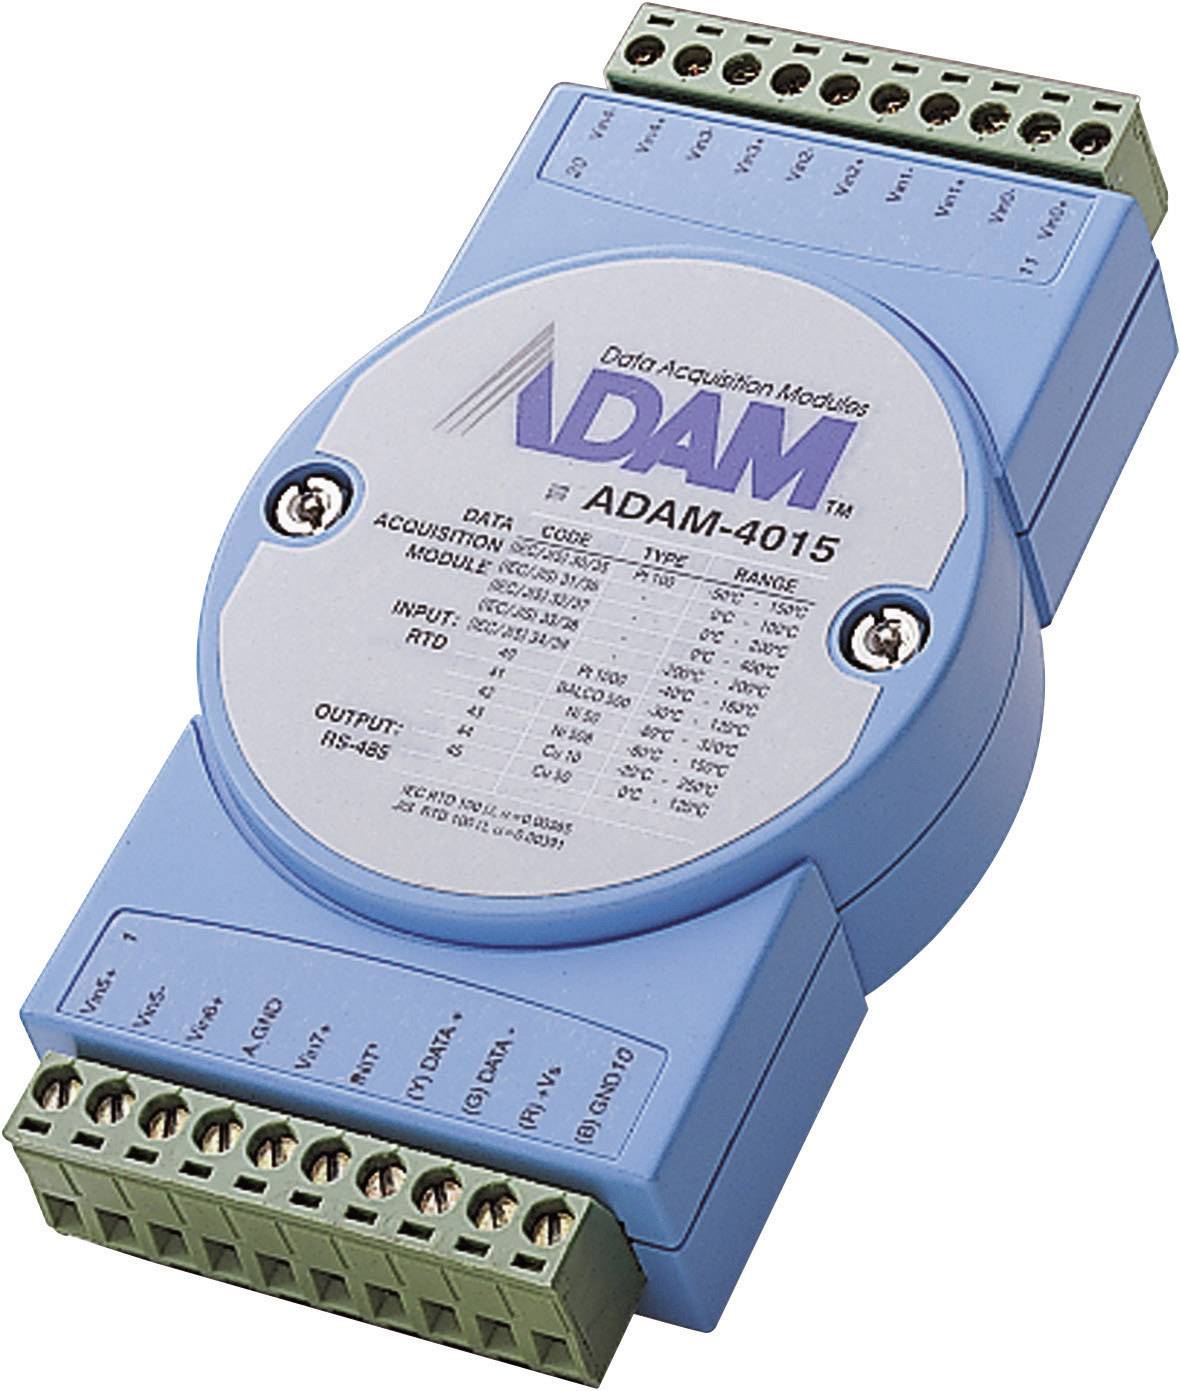 ADAM-4060 Data Acquisition Module Brand New